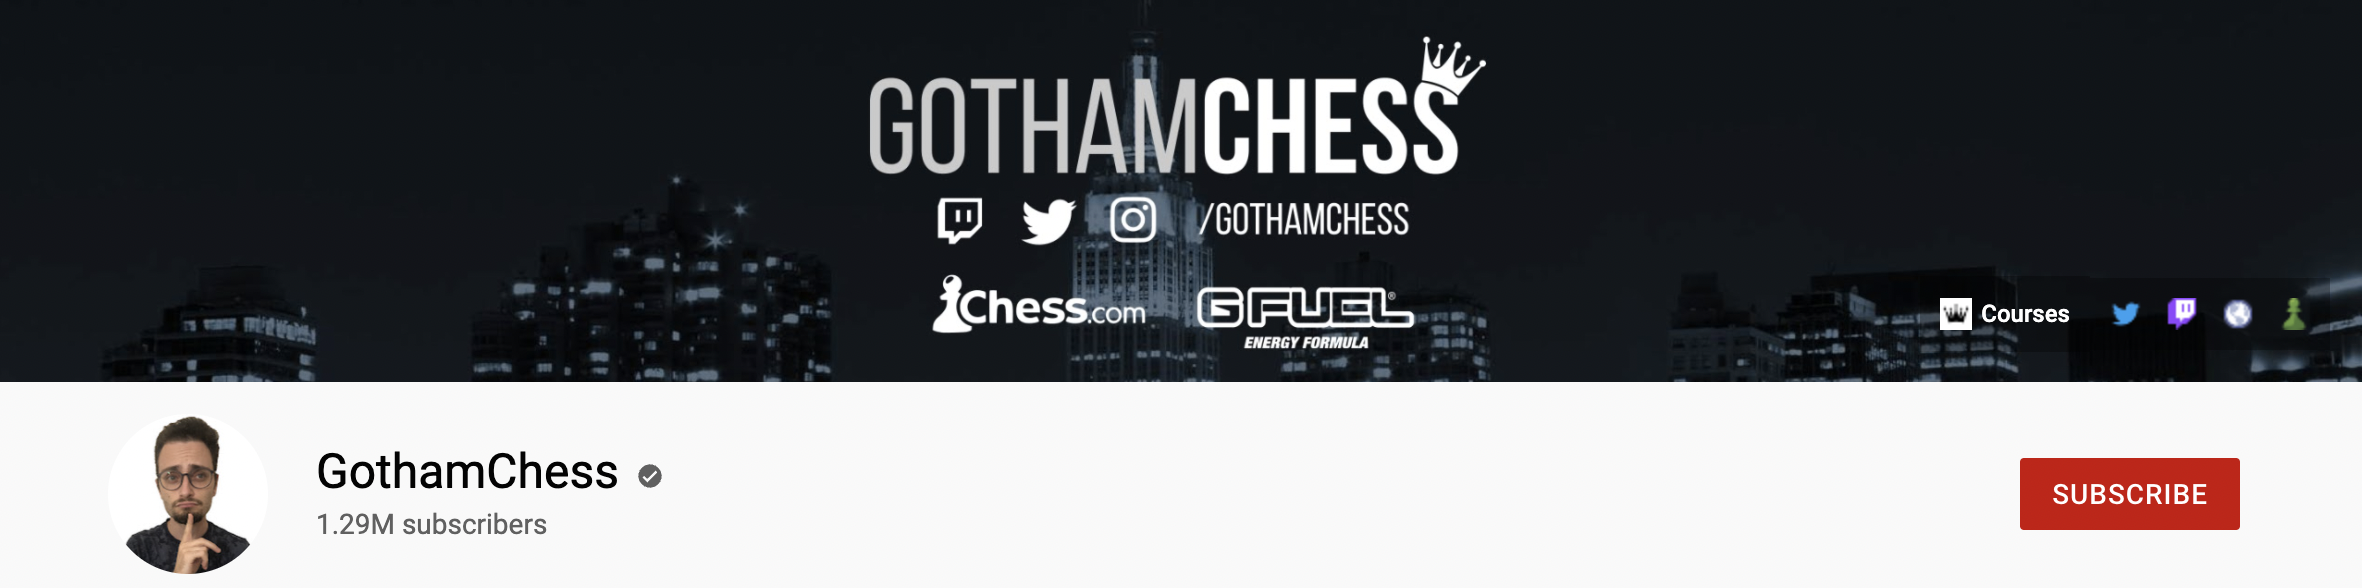 GothamChess Youtube Channel